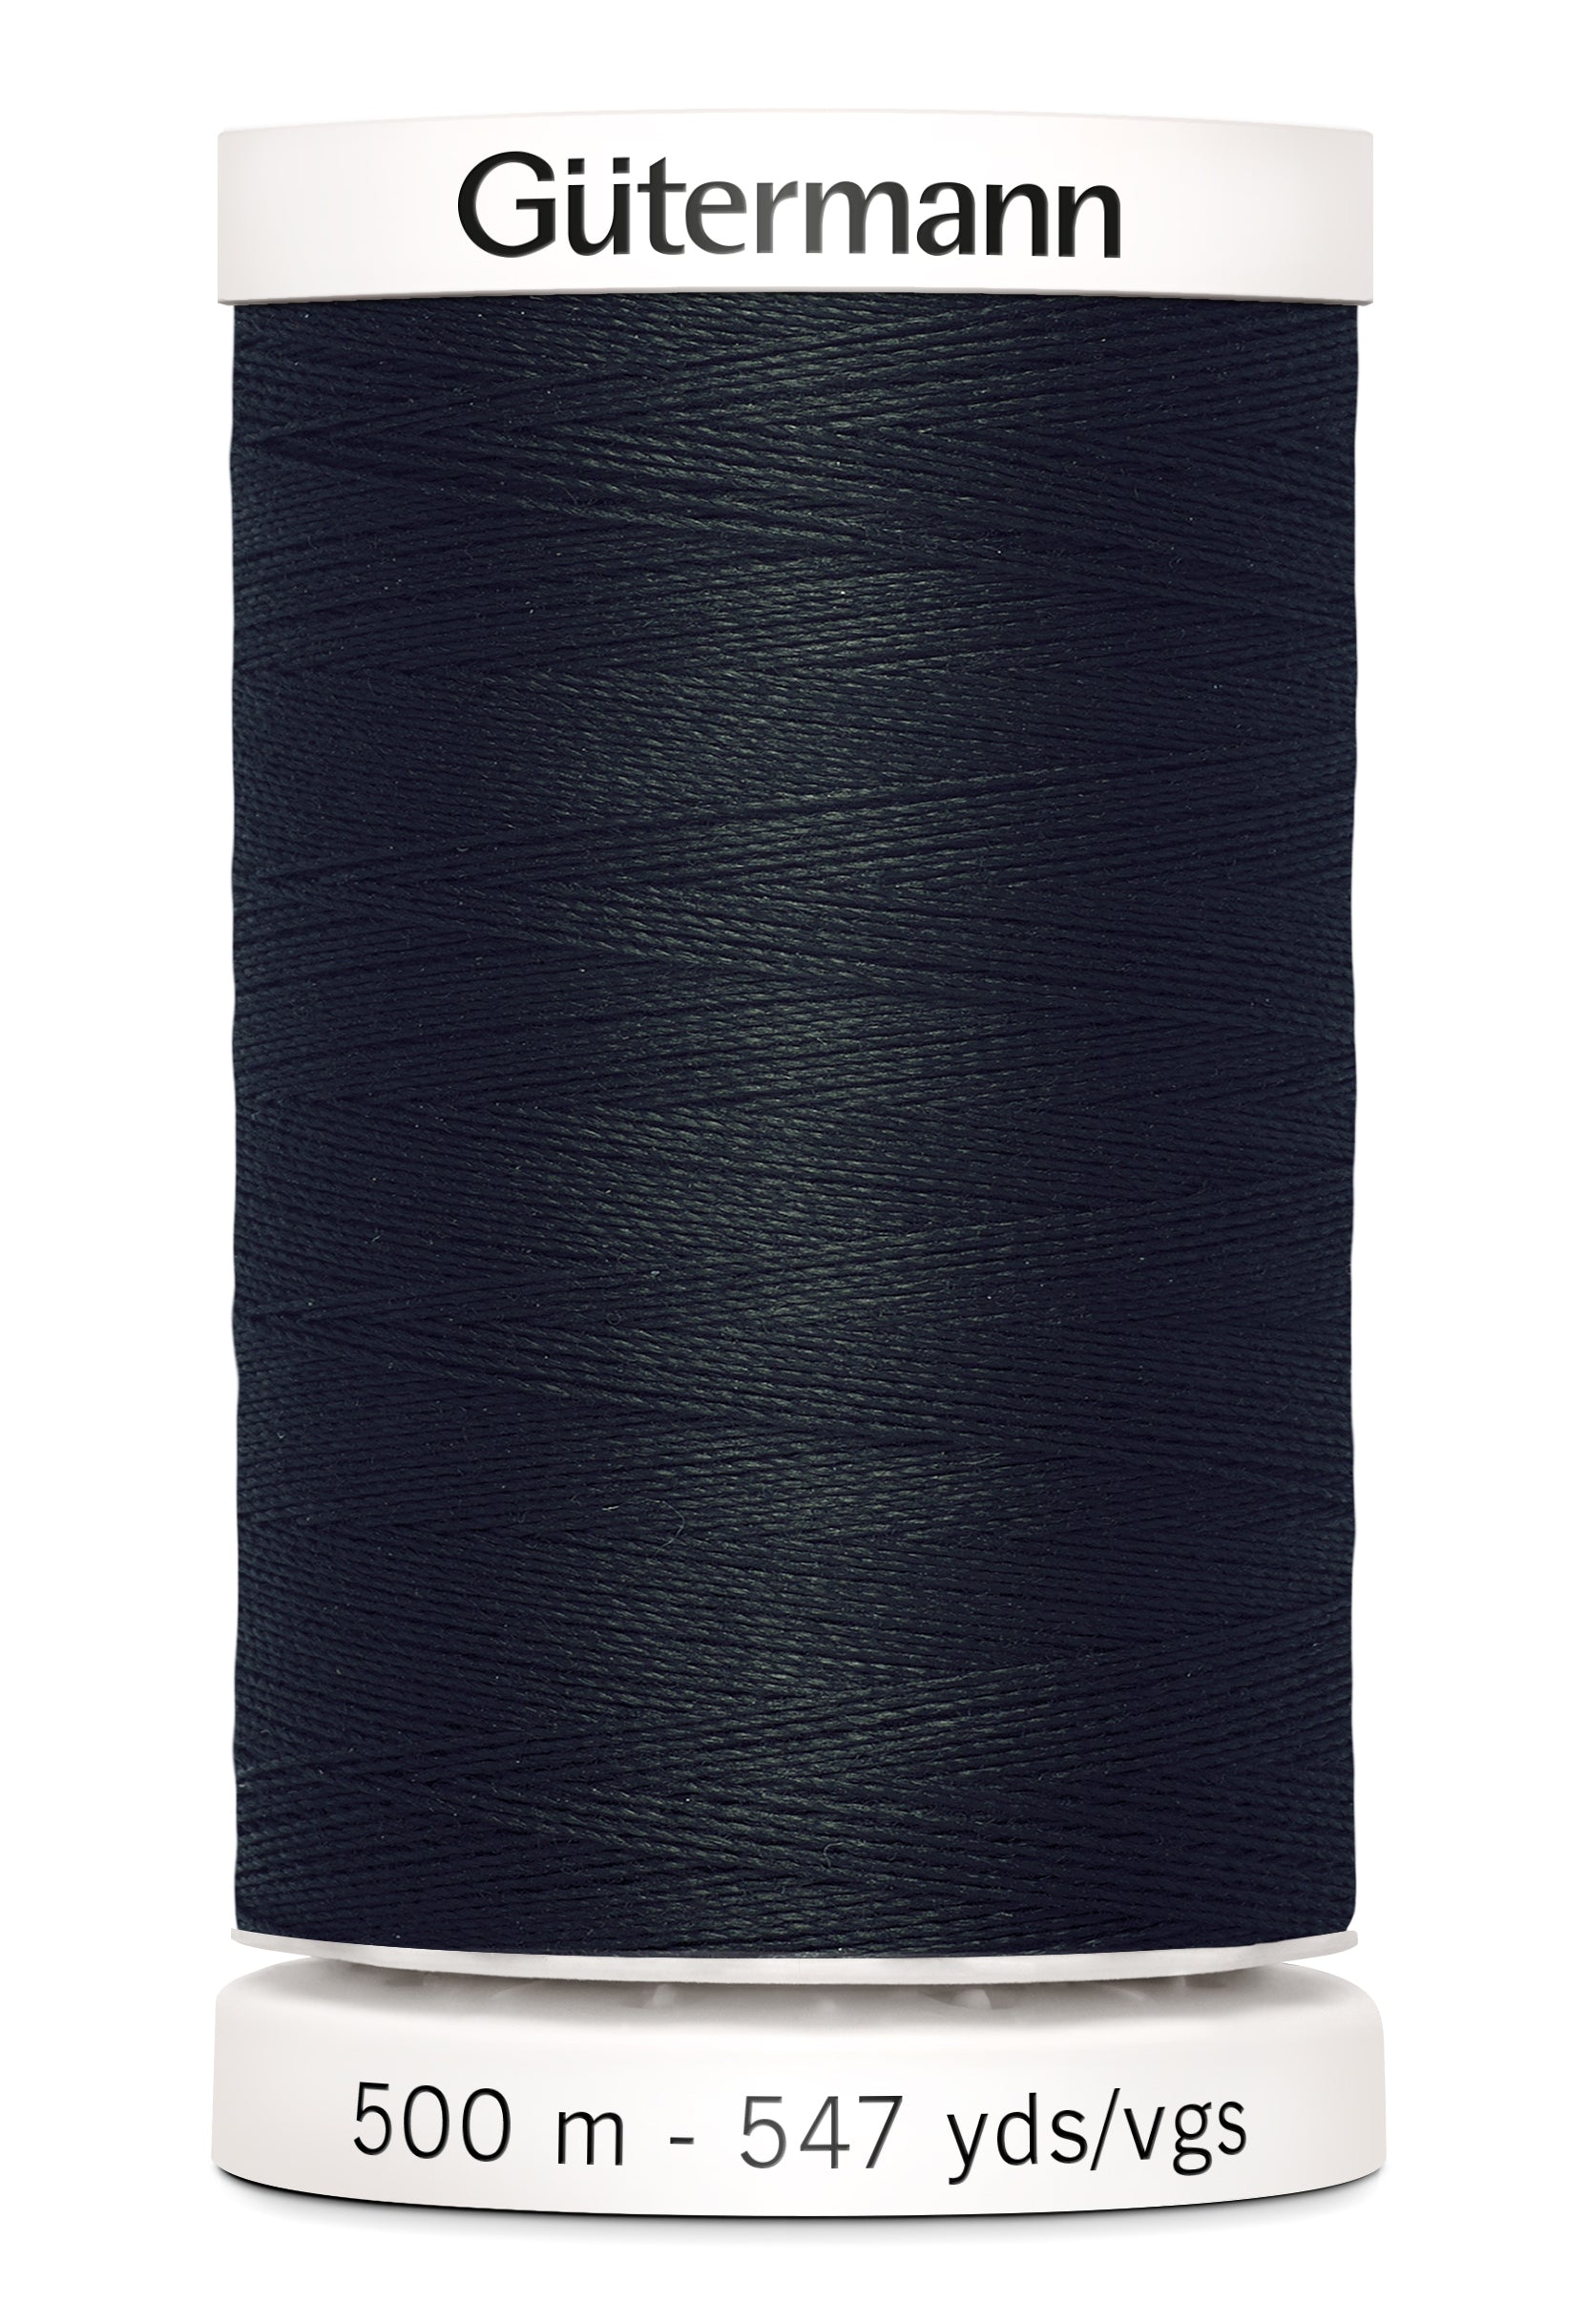 Gütermann sewing thread 000 - Black - 500m - MaaiDesign